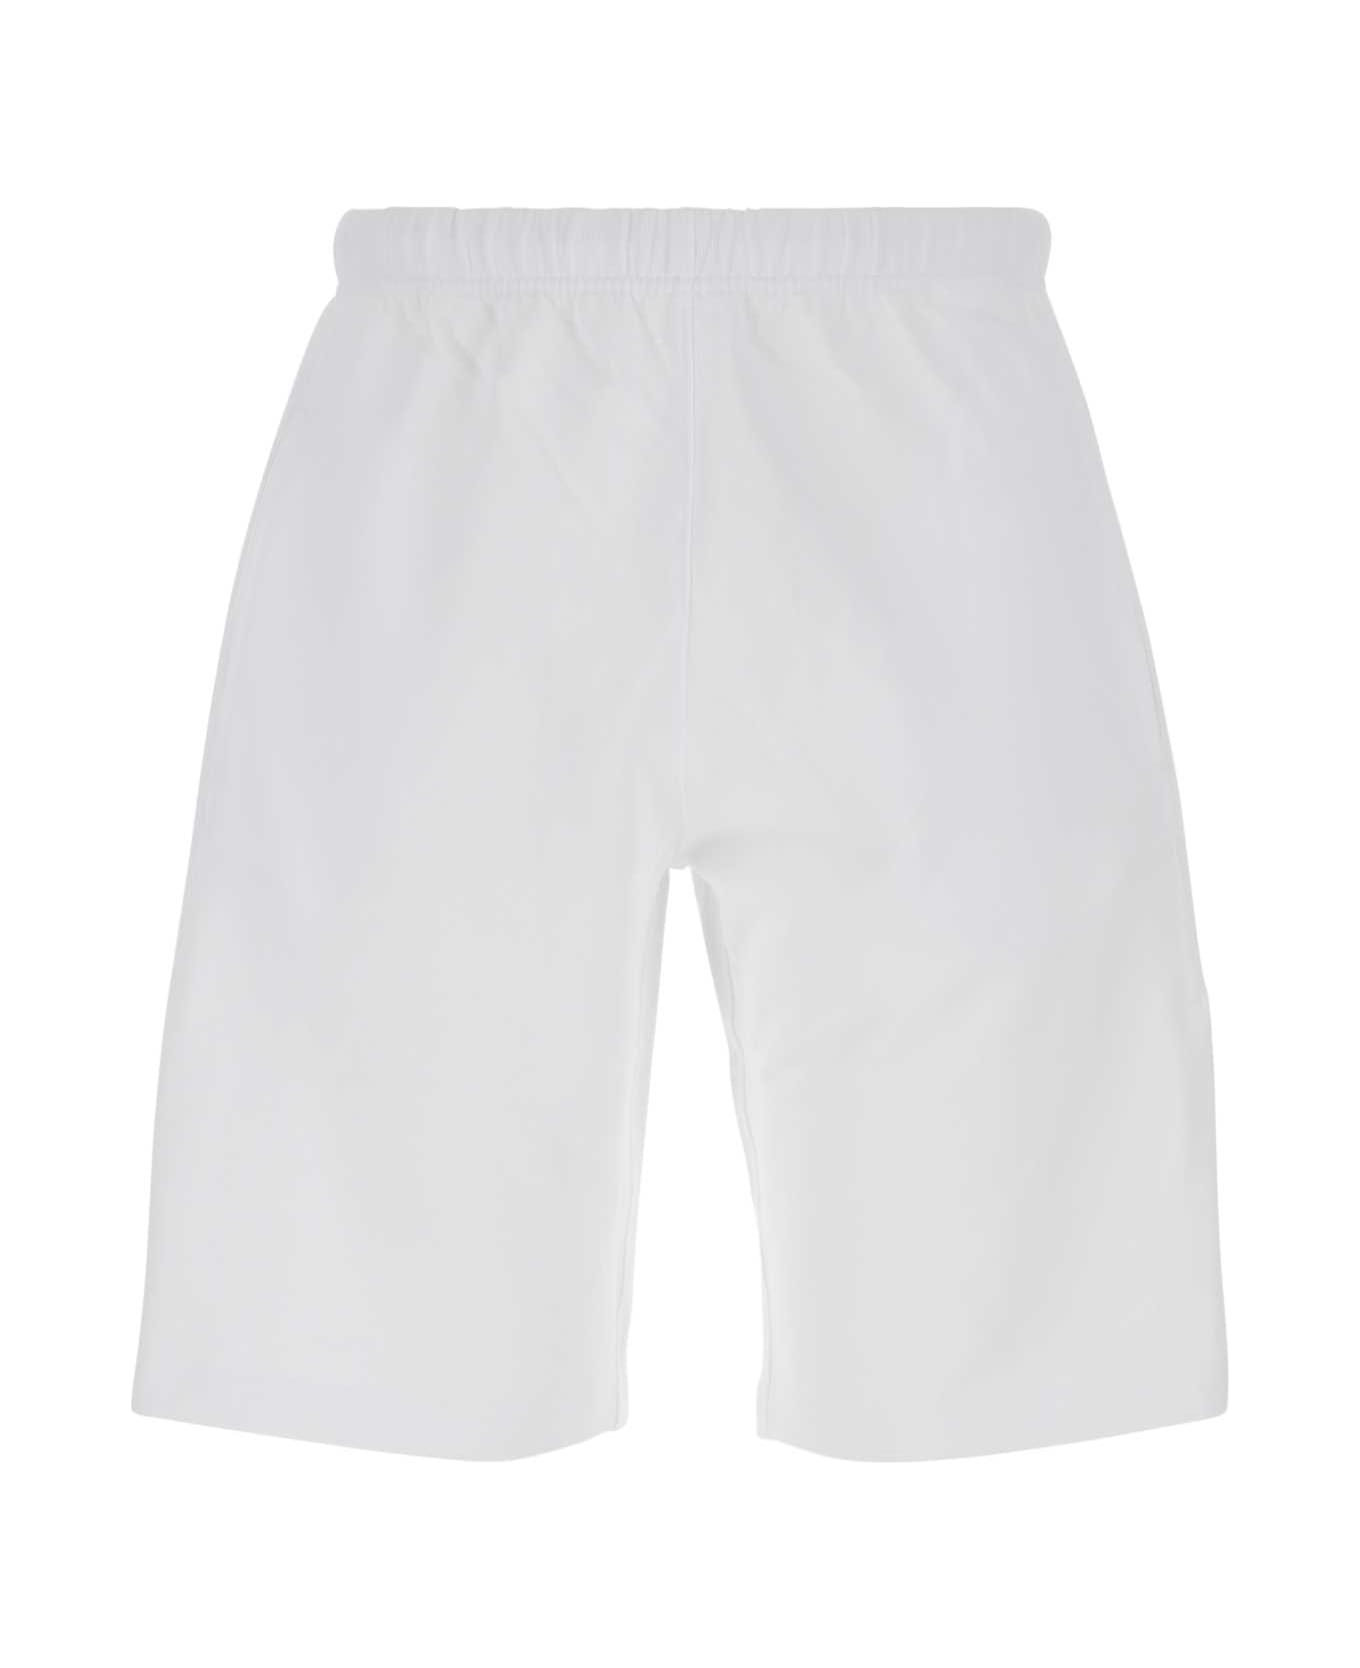 Kenzo White Stretch Cotton Bermuda Shorts - 01